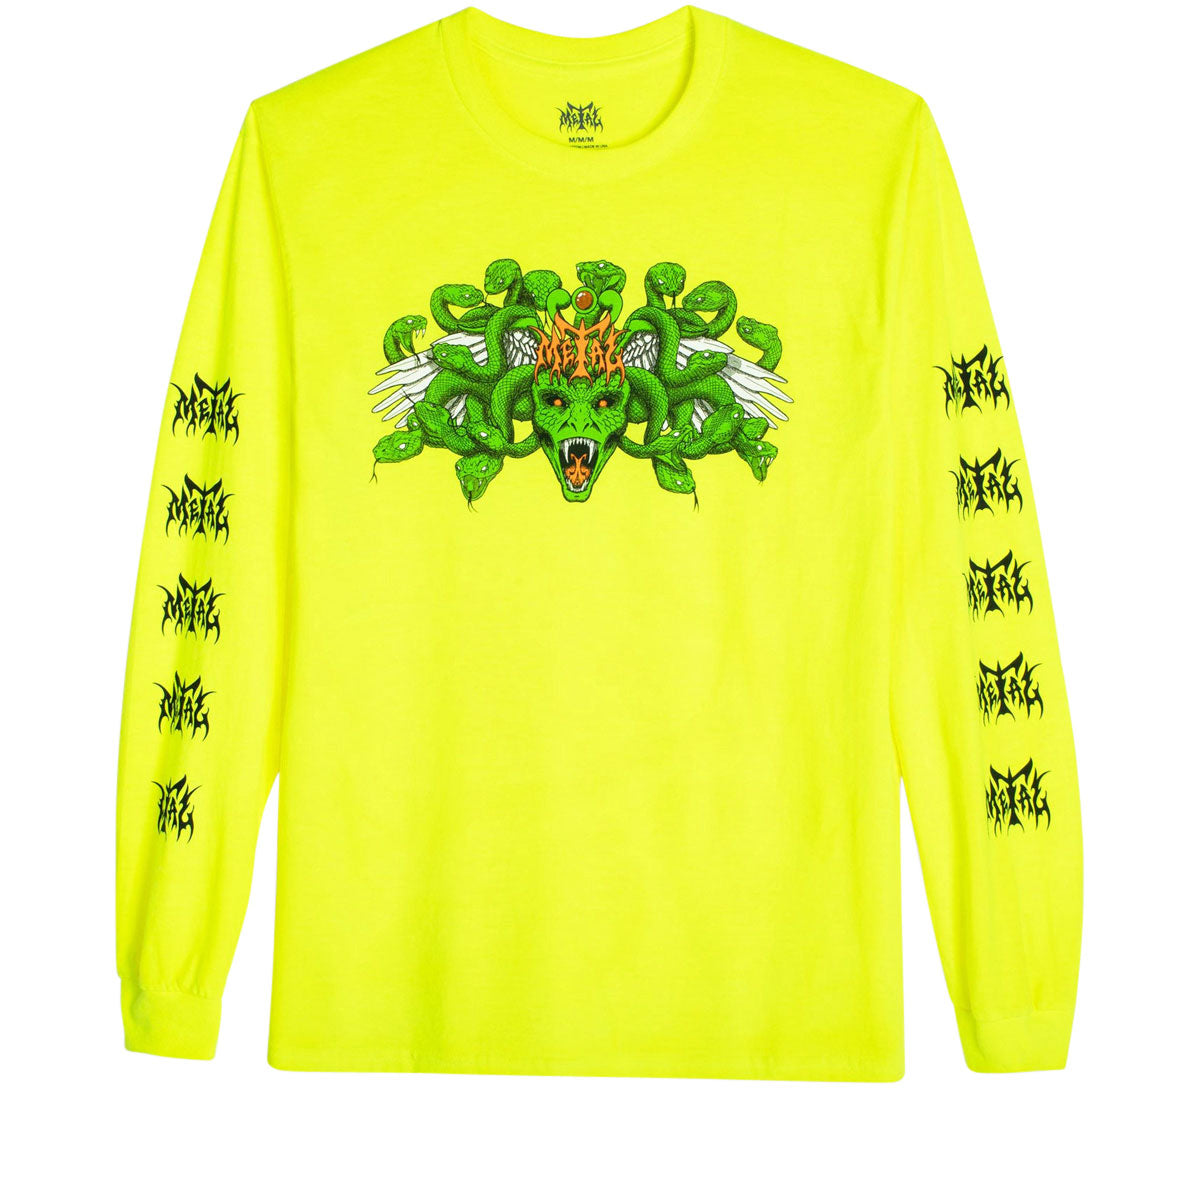 Metal Medusa Long Sleeve T-Shirt - Safety Green image 1